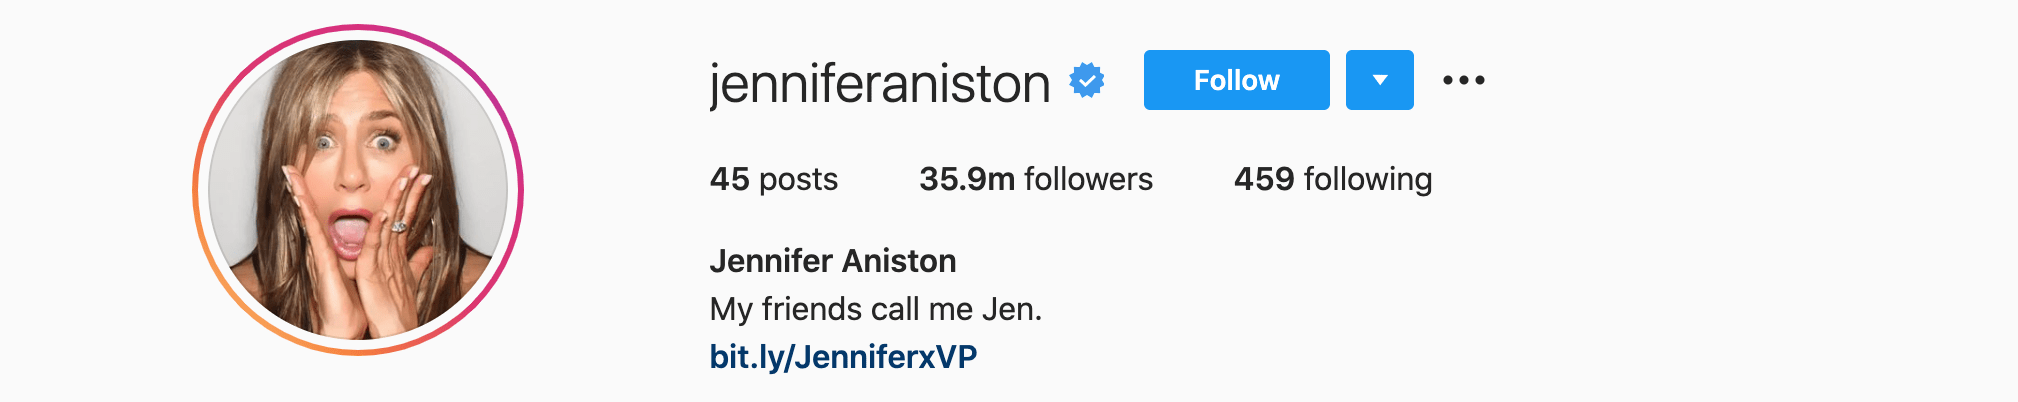 Top Instagram Influencers - JENNIFER ANISTON